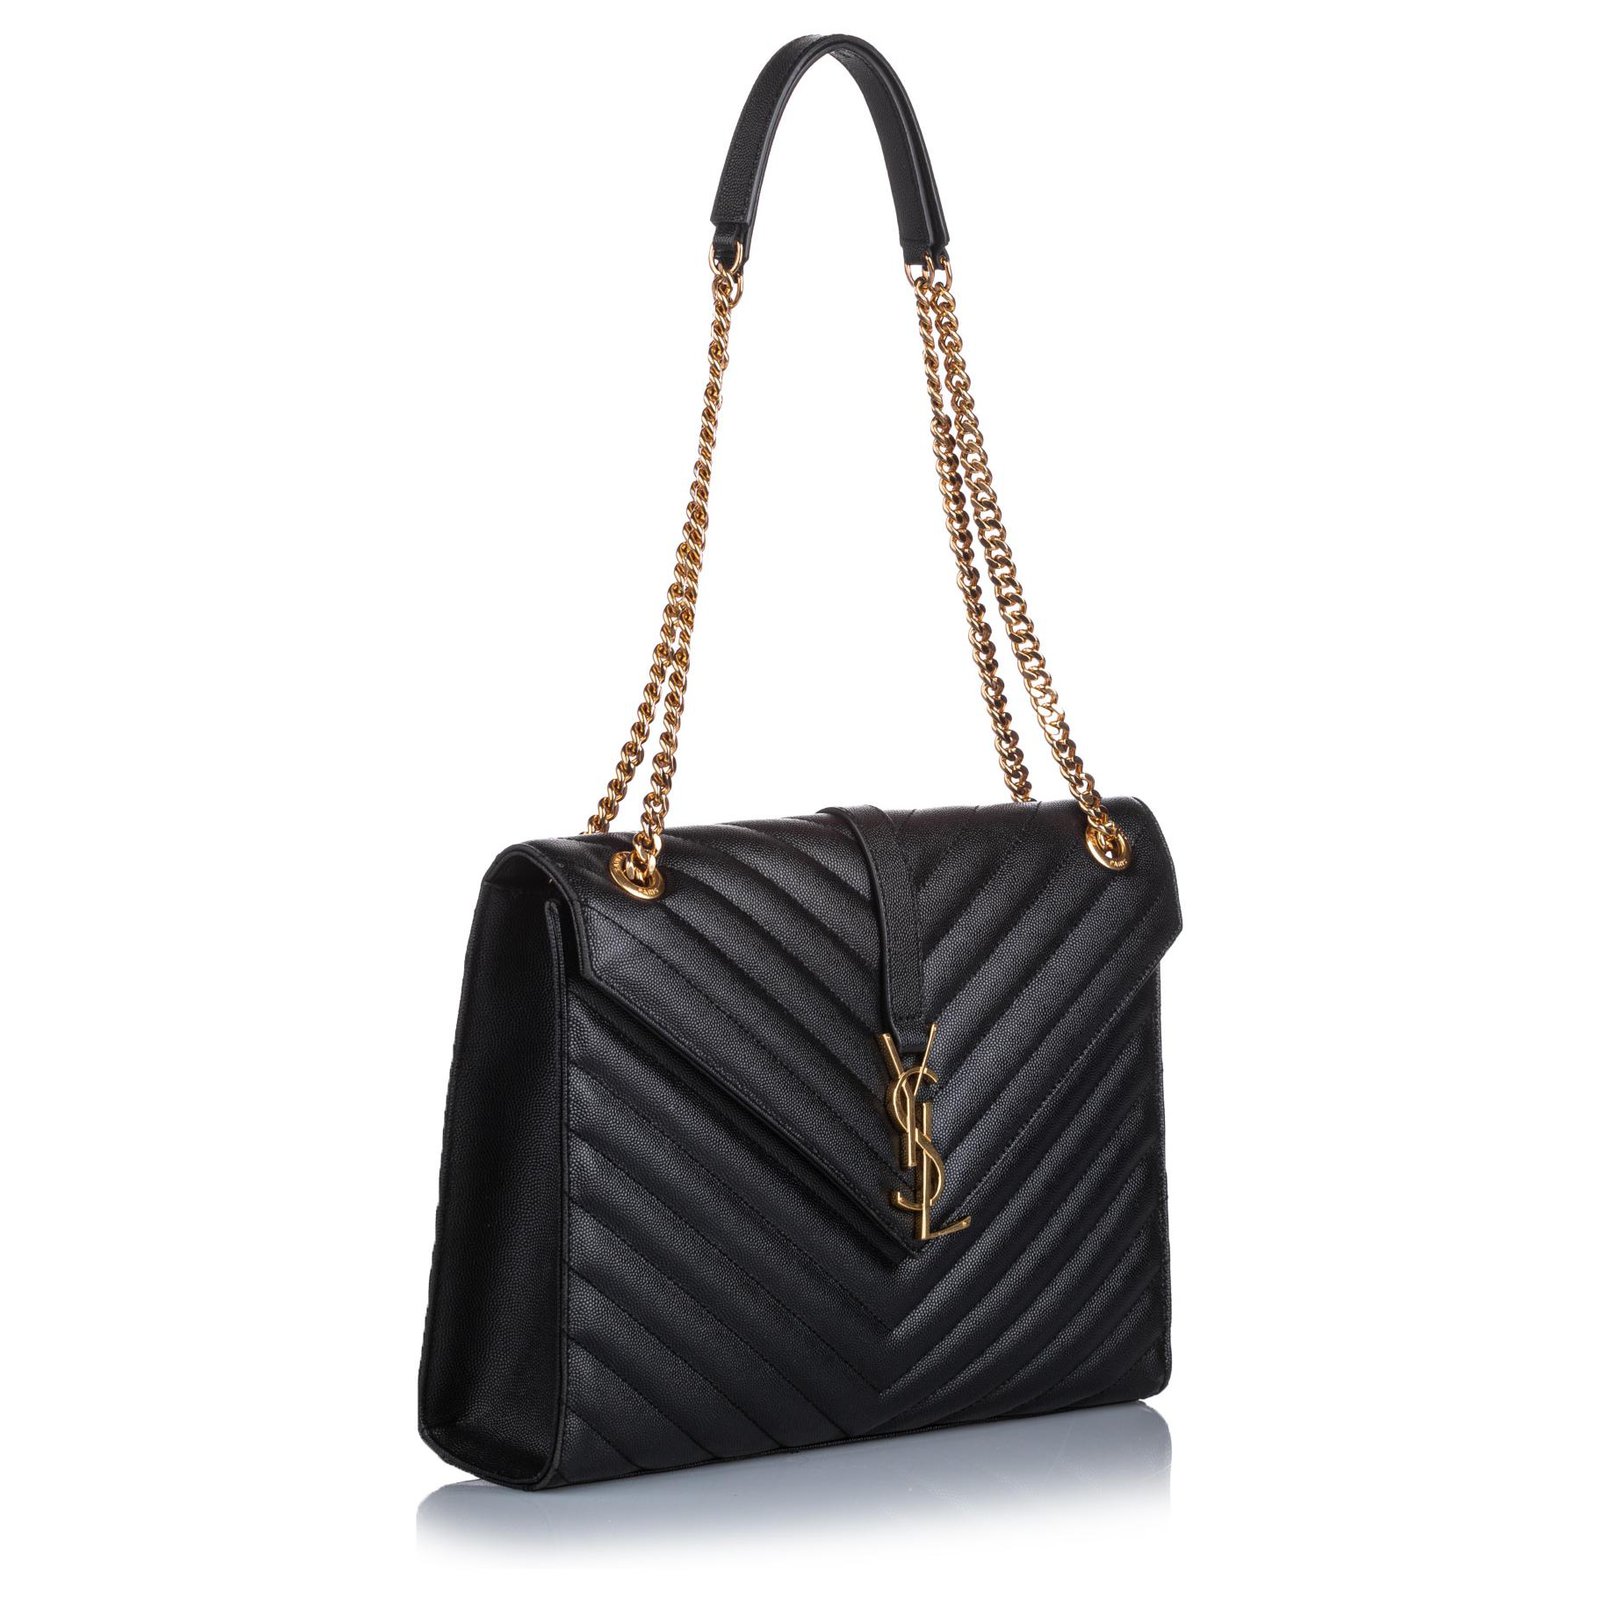 Yves Saint Laurent/ YSL 393593 Black Leather Envelope Chain Wallet Clutch/  Shoulder/ Sling Bag - The Attic Place